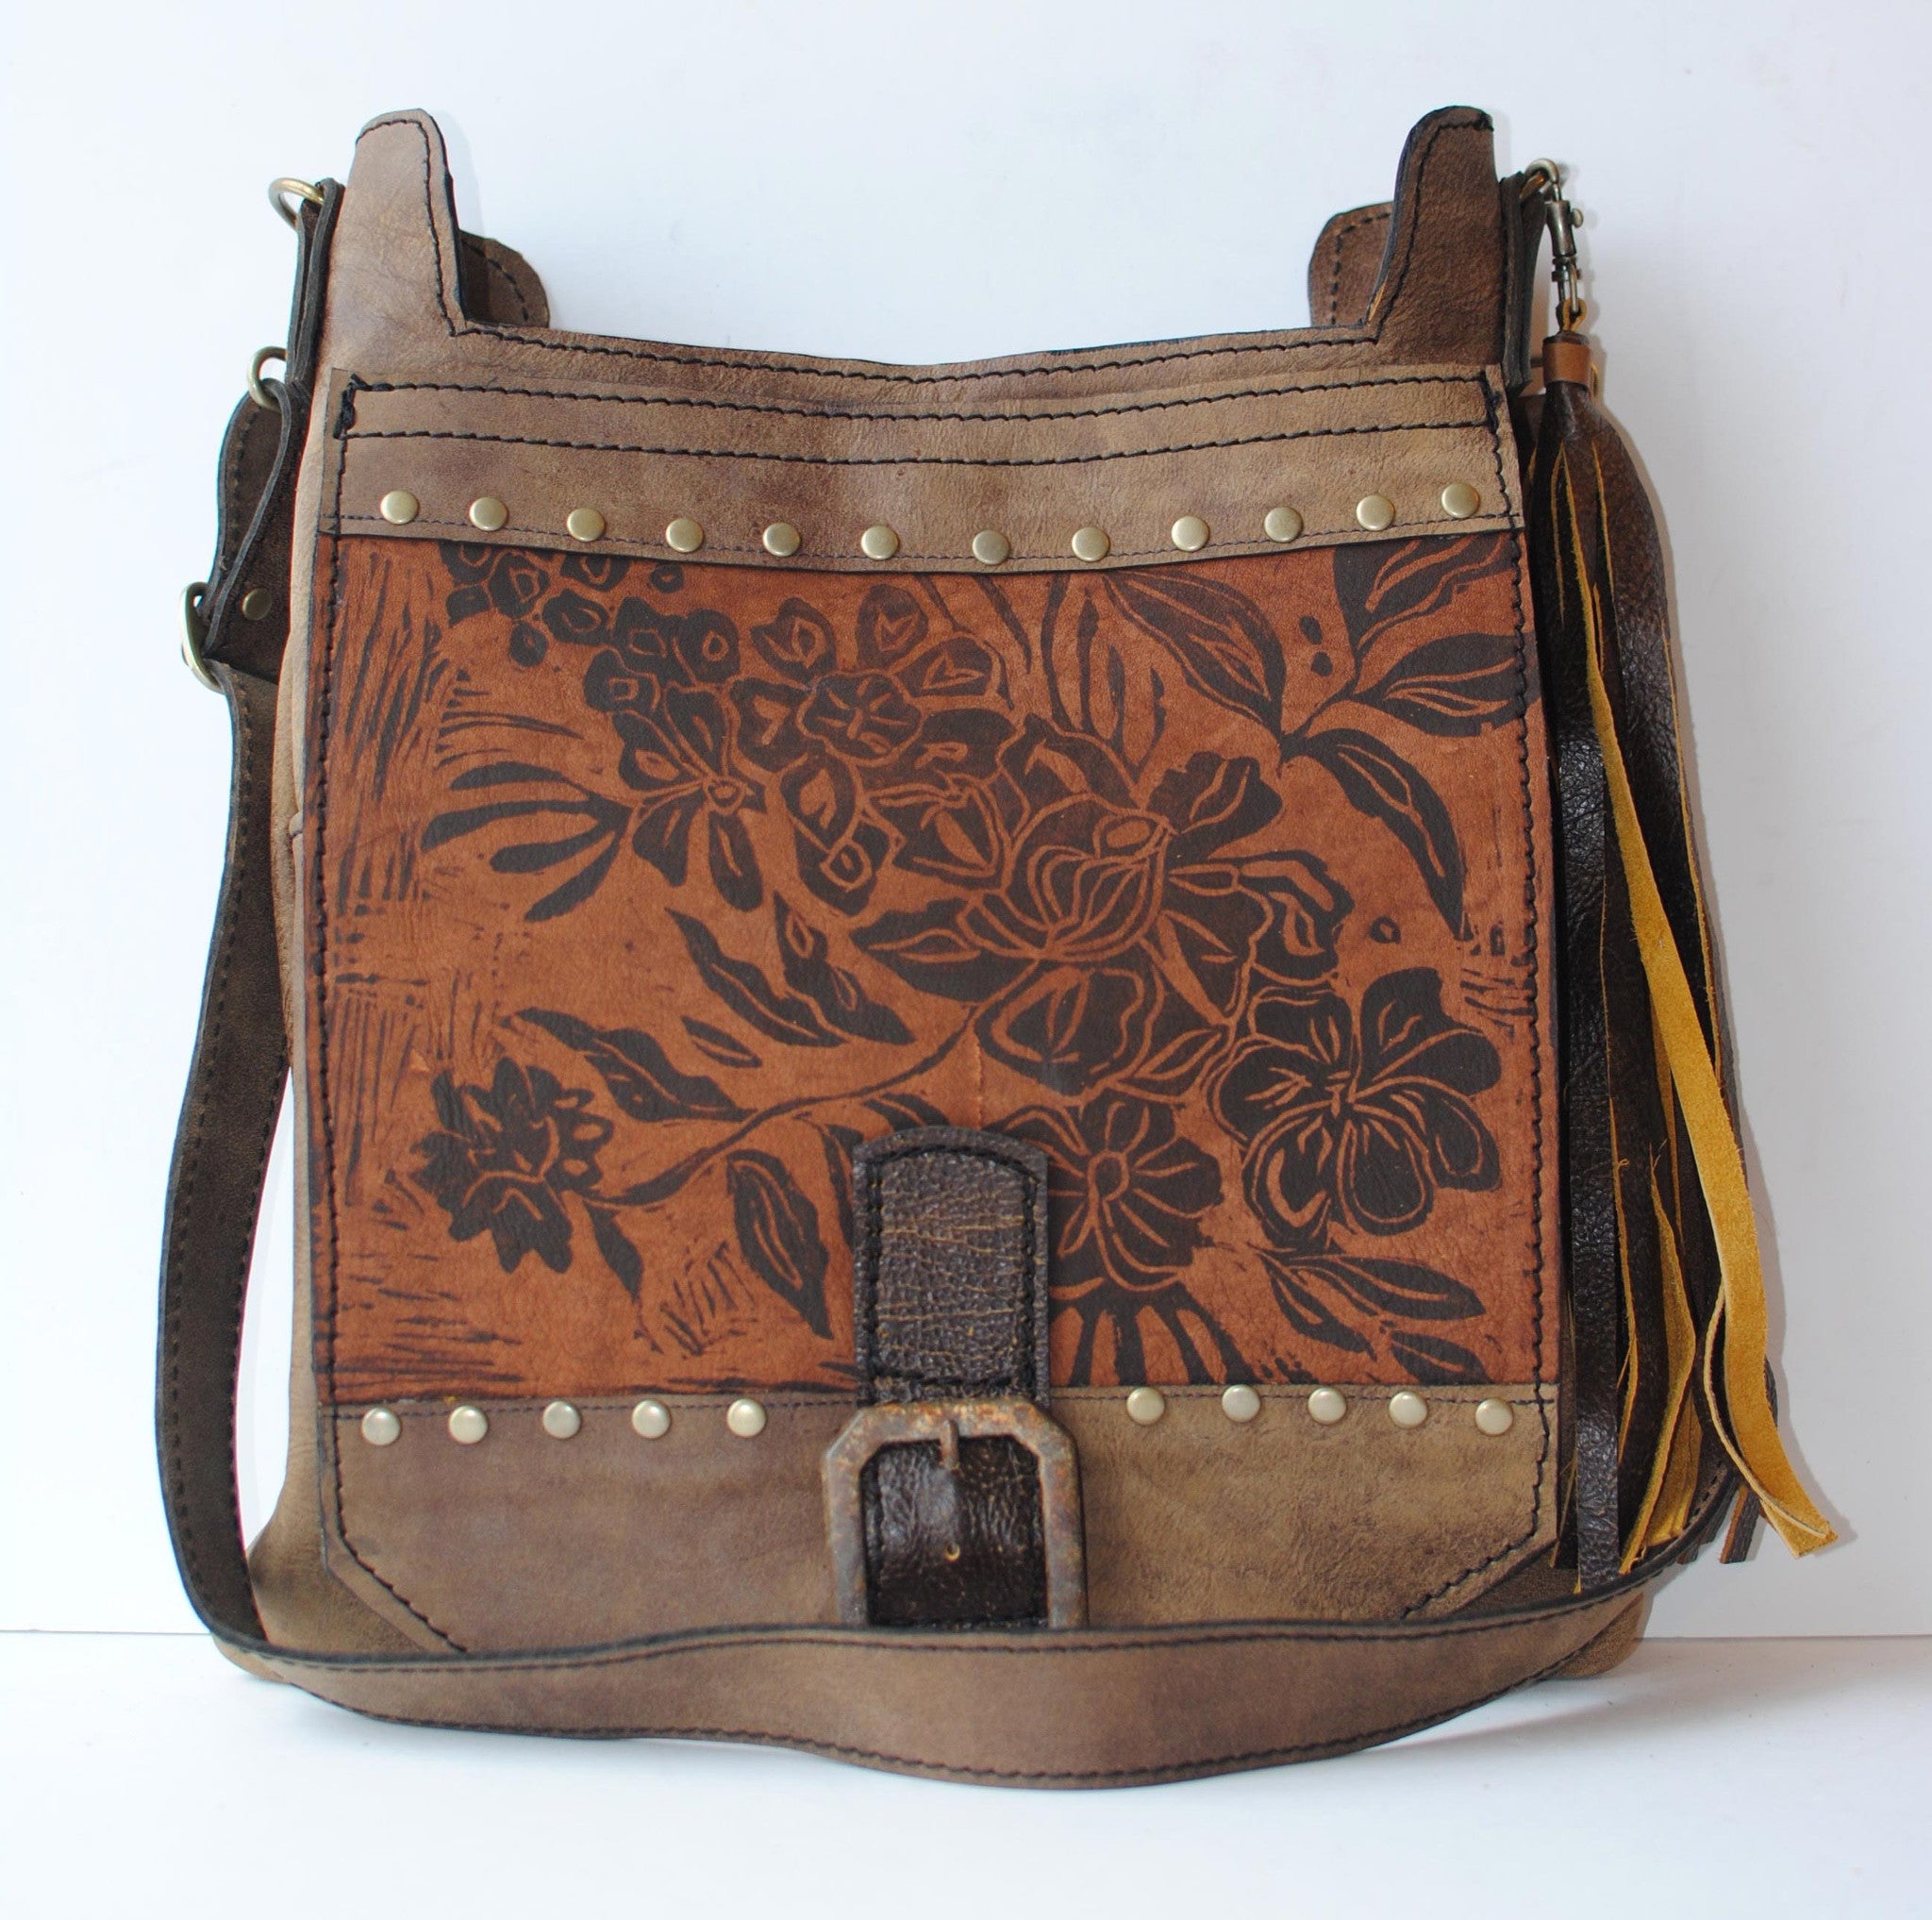 Urban Gypsy Design Urban Satchel Handbag in Wildflower Print and Lodge Color. Artisan Designer Handbags